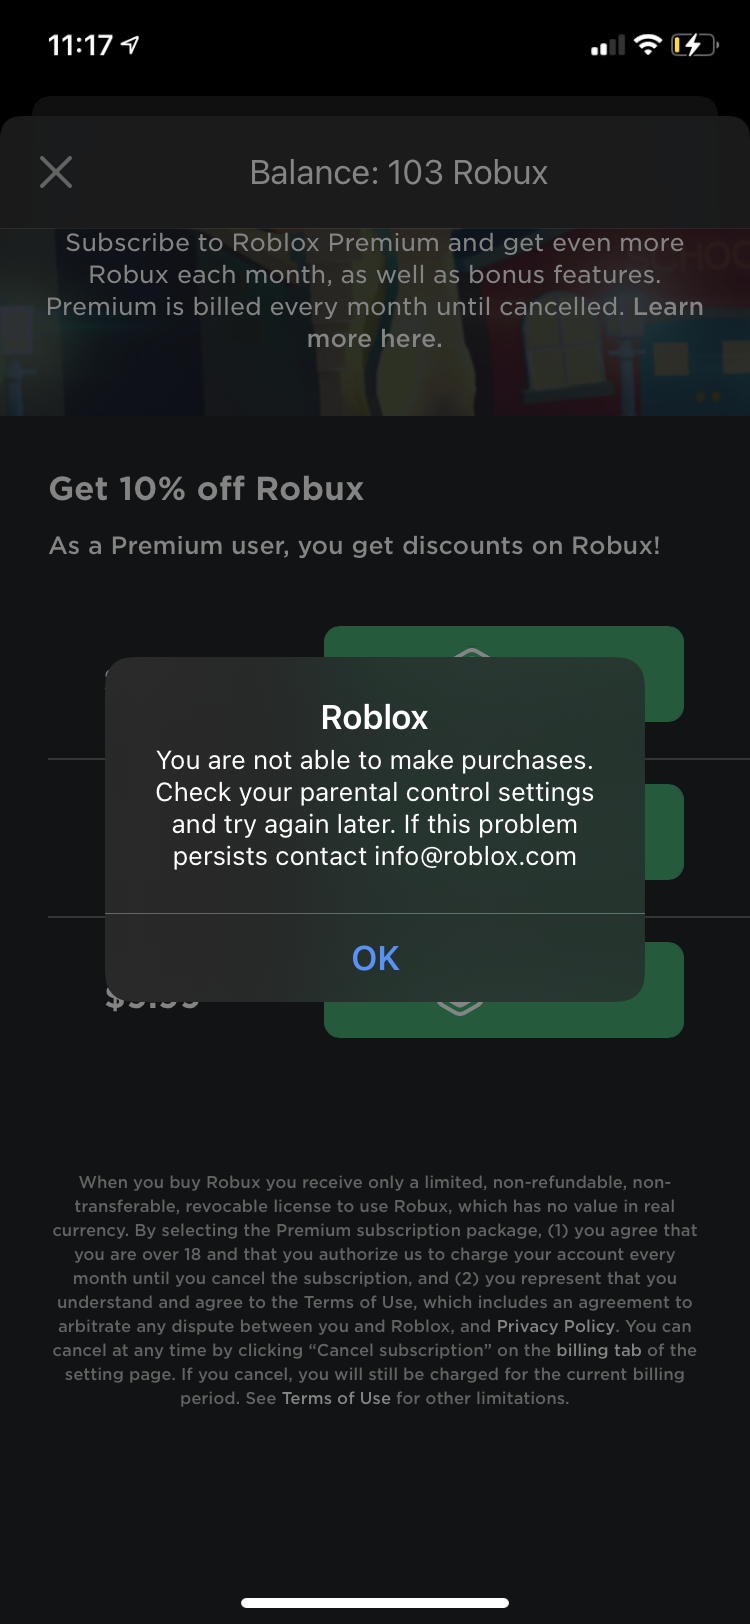 How To Set Up Roblox Parental Controls